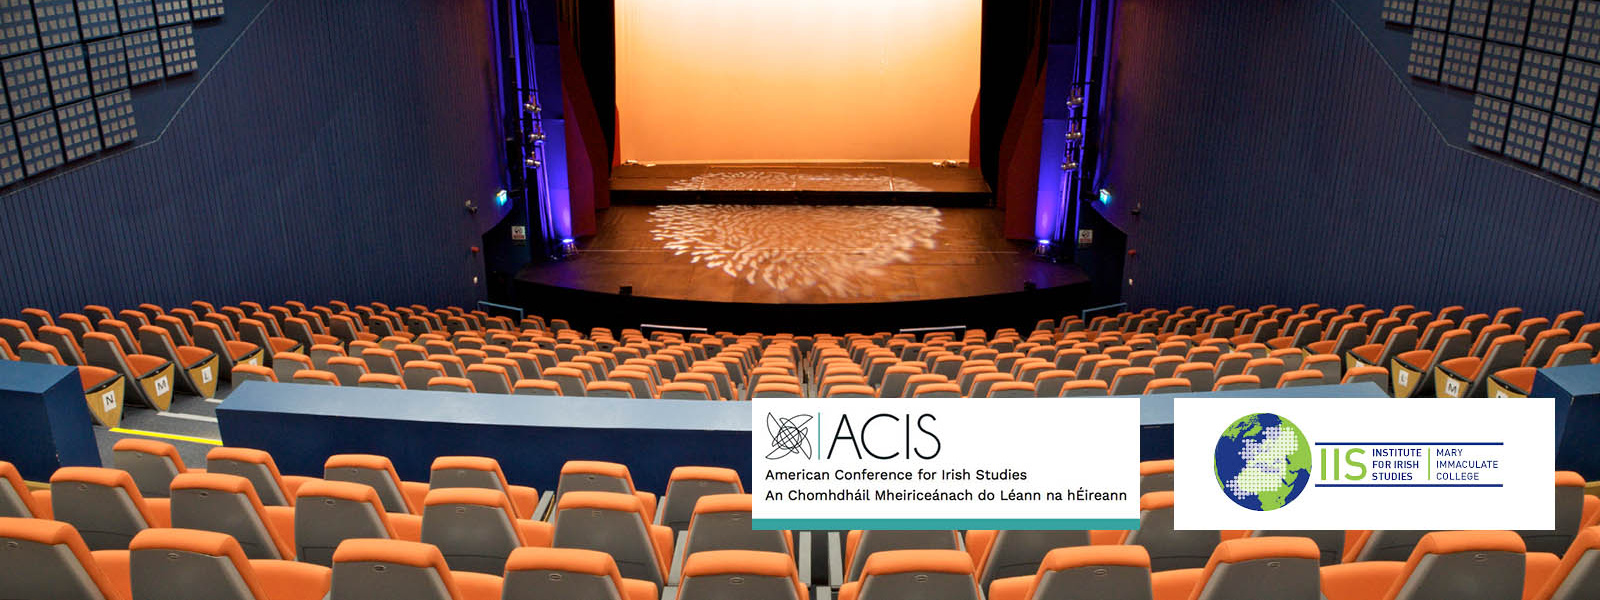 Limetree Theatre interior, MIC with ACIS and IIS logos overlayed.